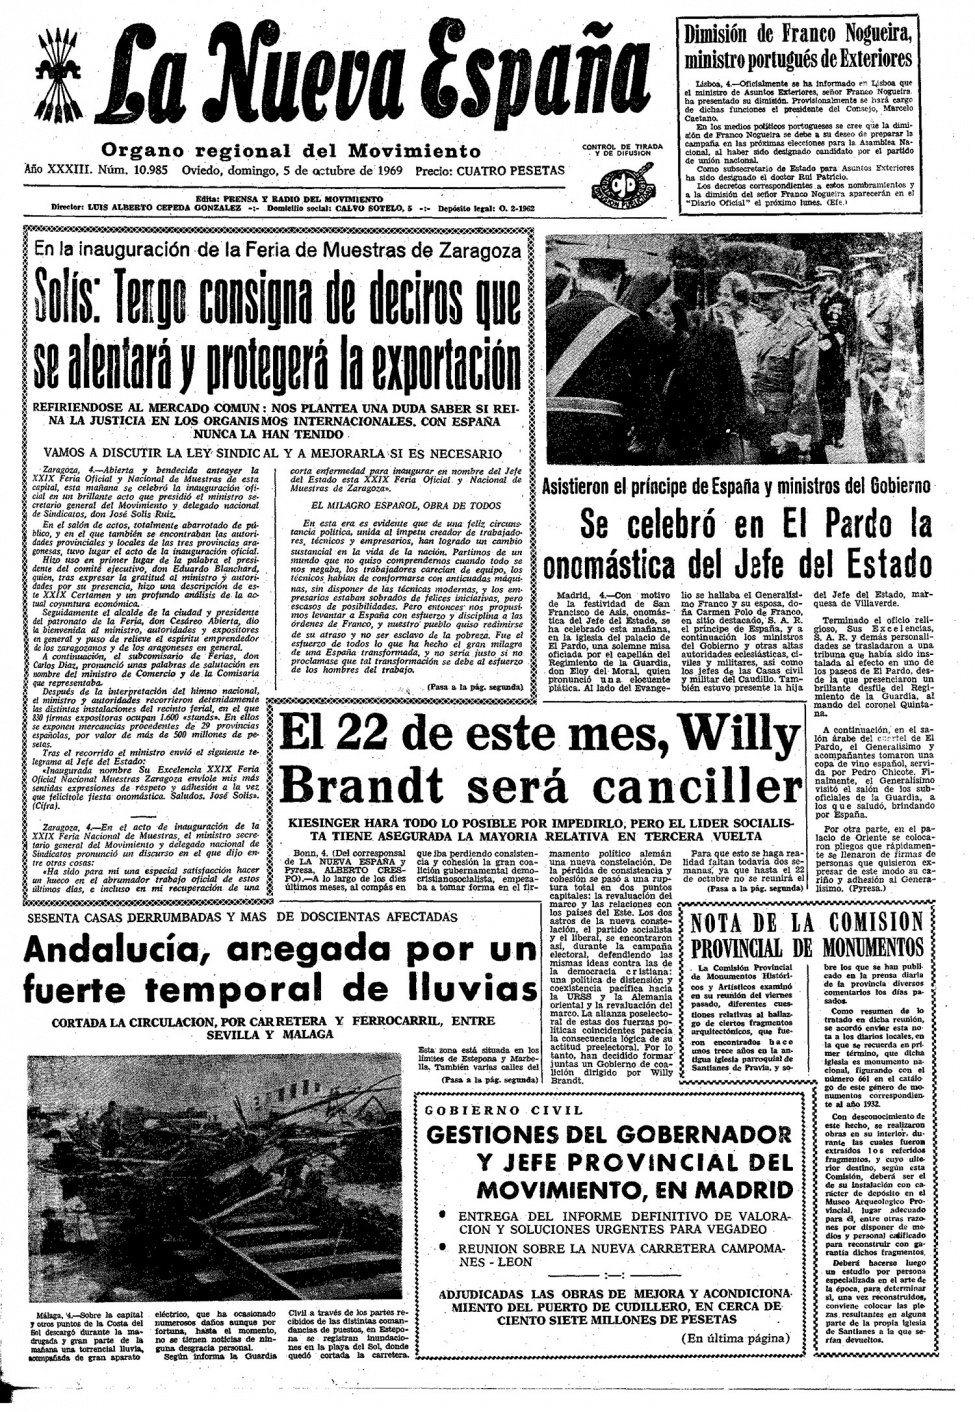 Portada del Domingo, 5 de Octubre de 1969